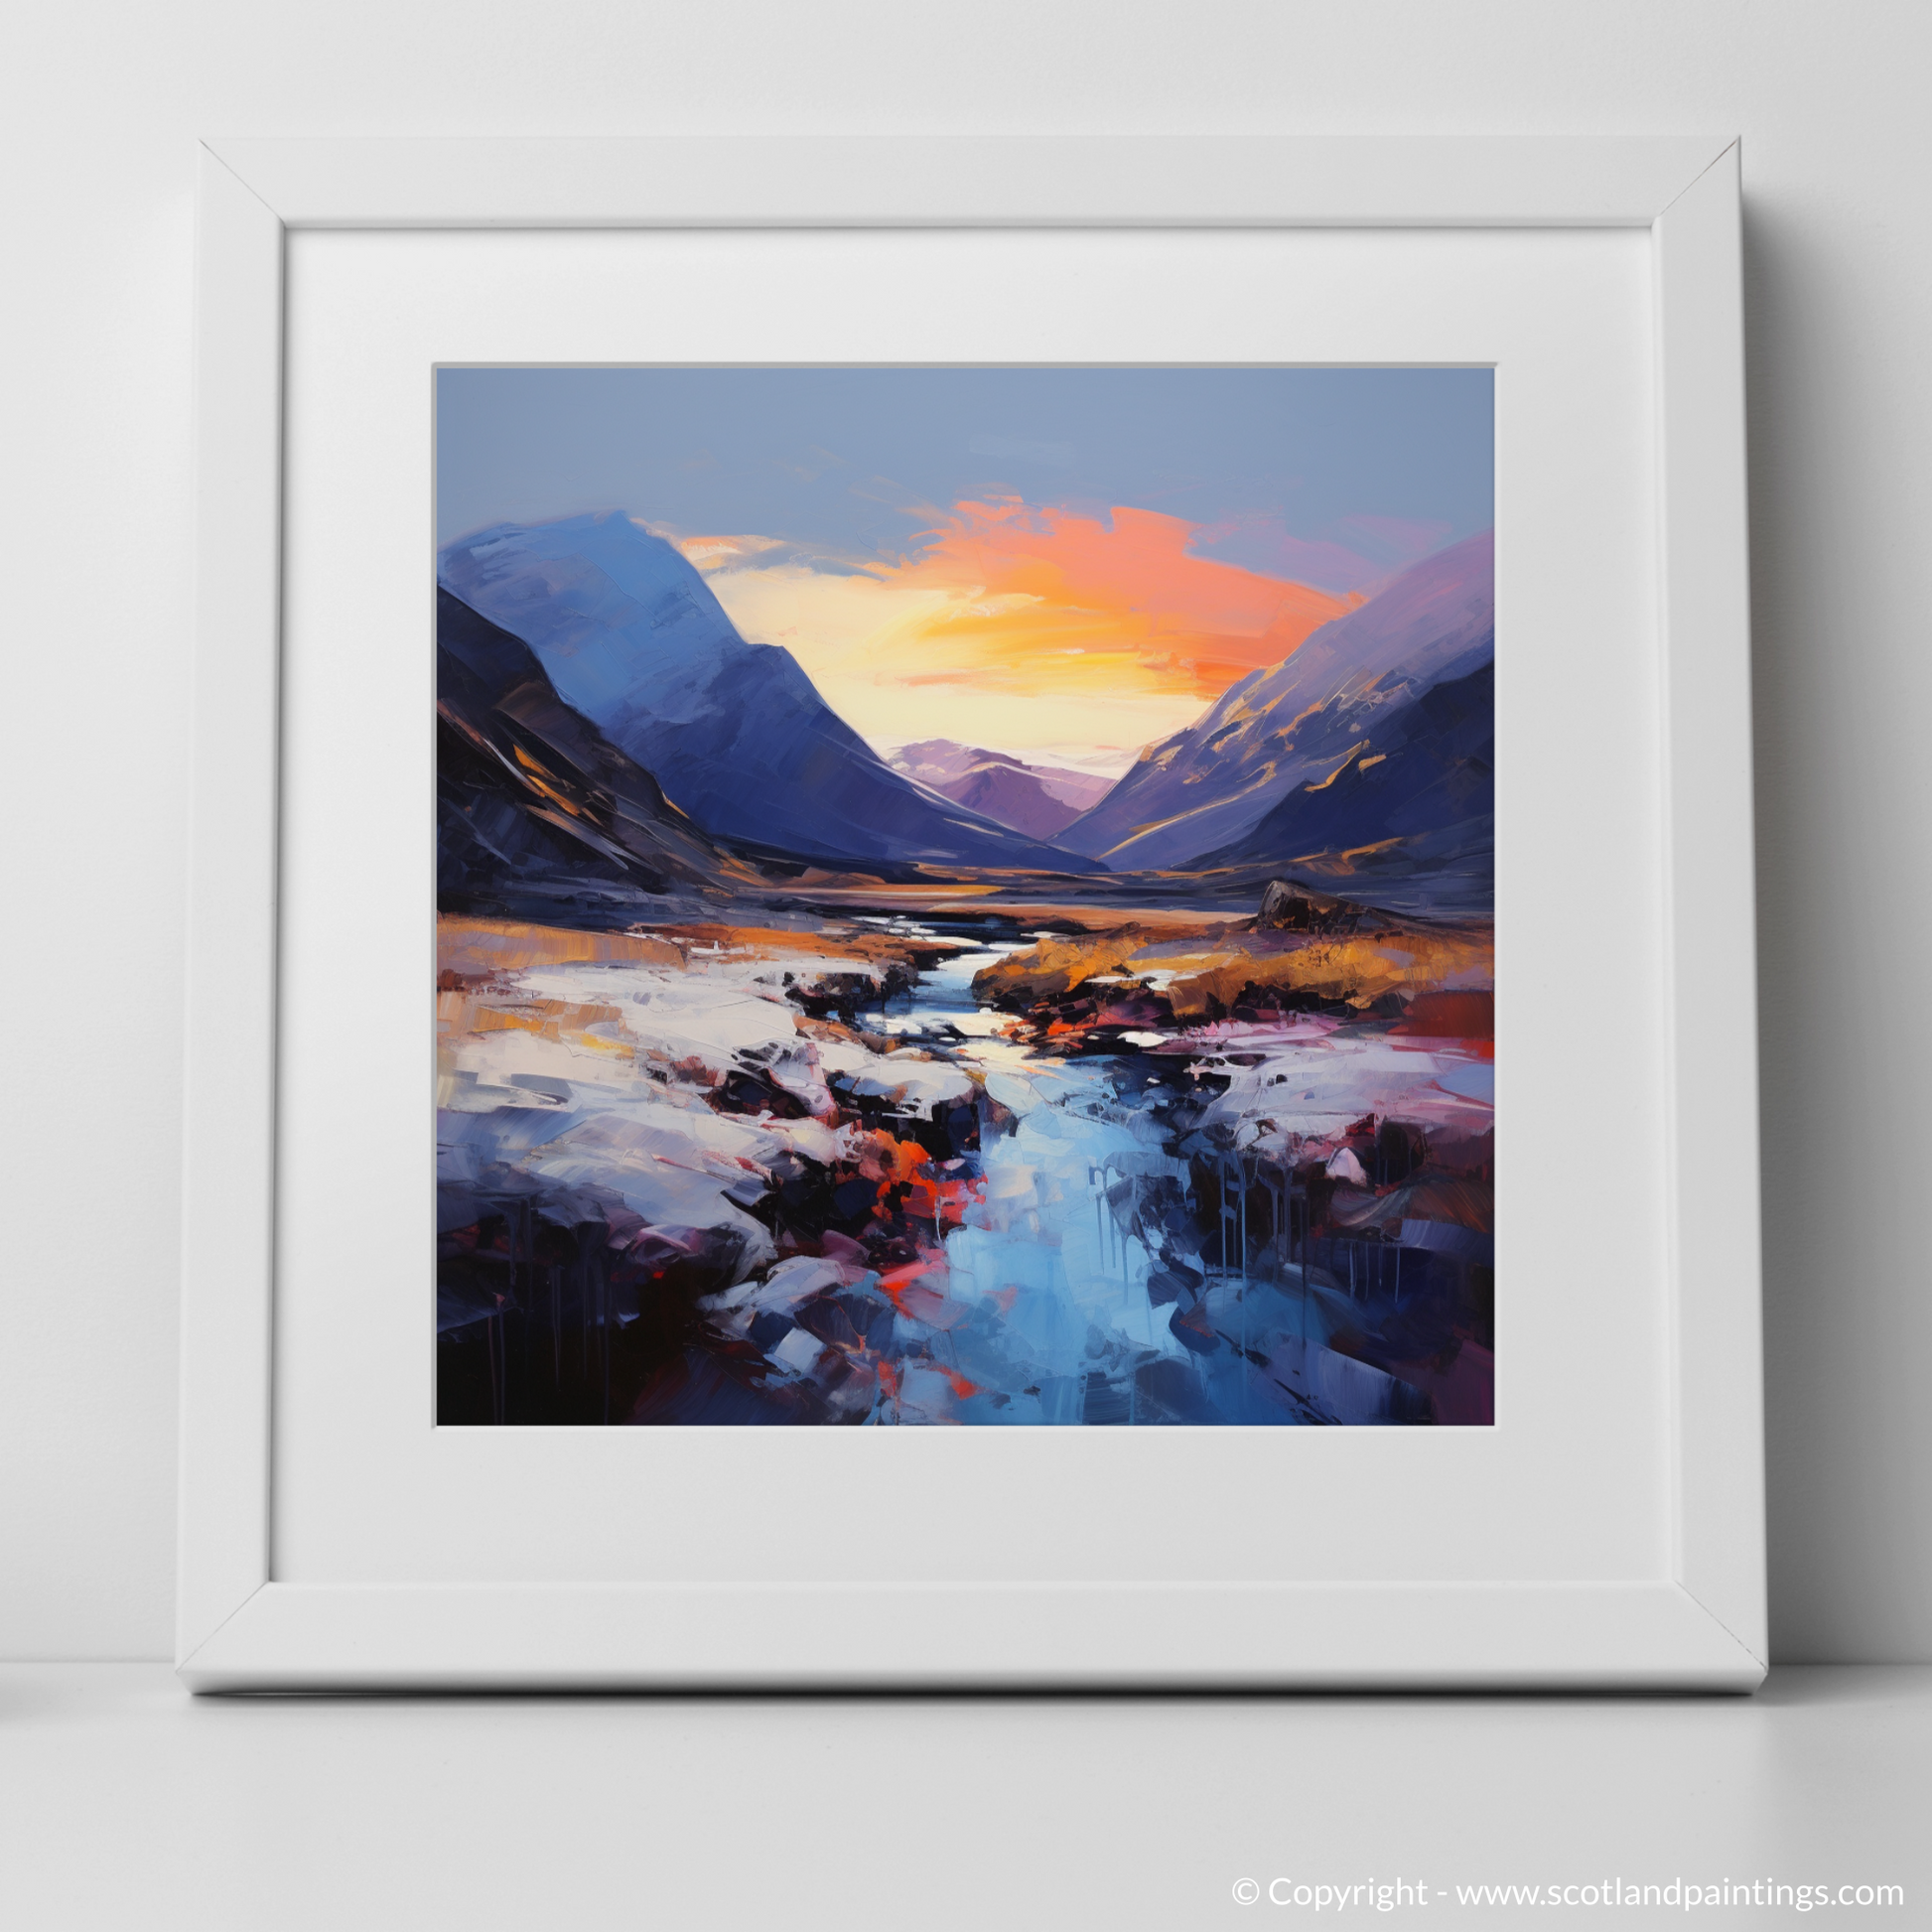 Art Print of Soft twilight on slopes in Glencoe with a white frame